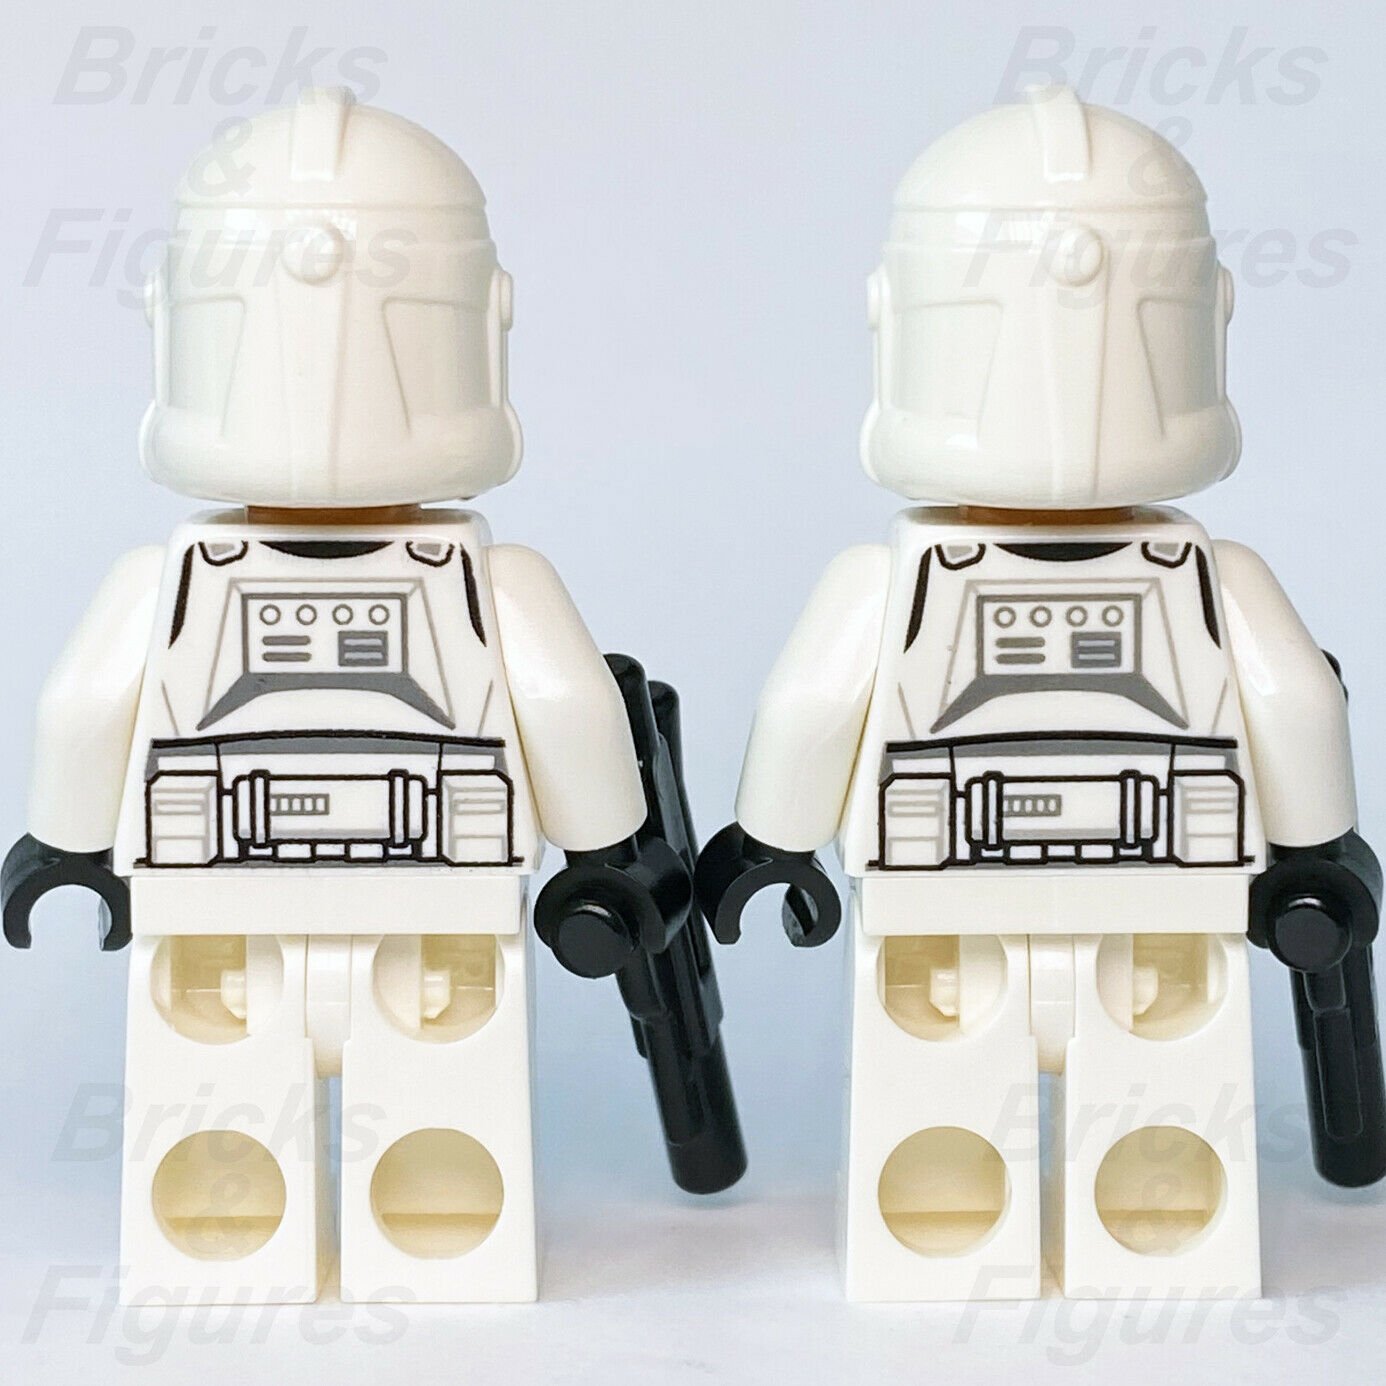 2 x New Star Wars LEGO 501st Legion Clone Trooper Episode 3 Minifigures 75280 4